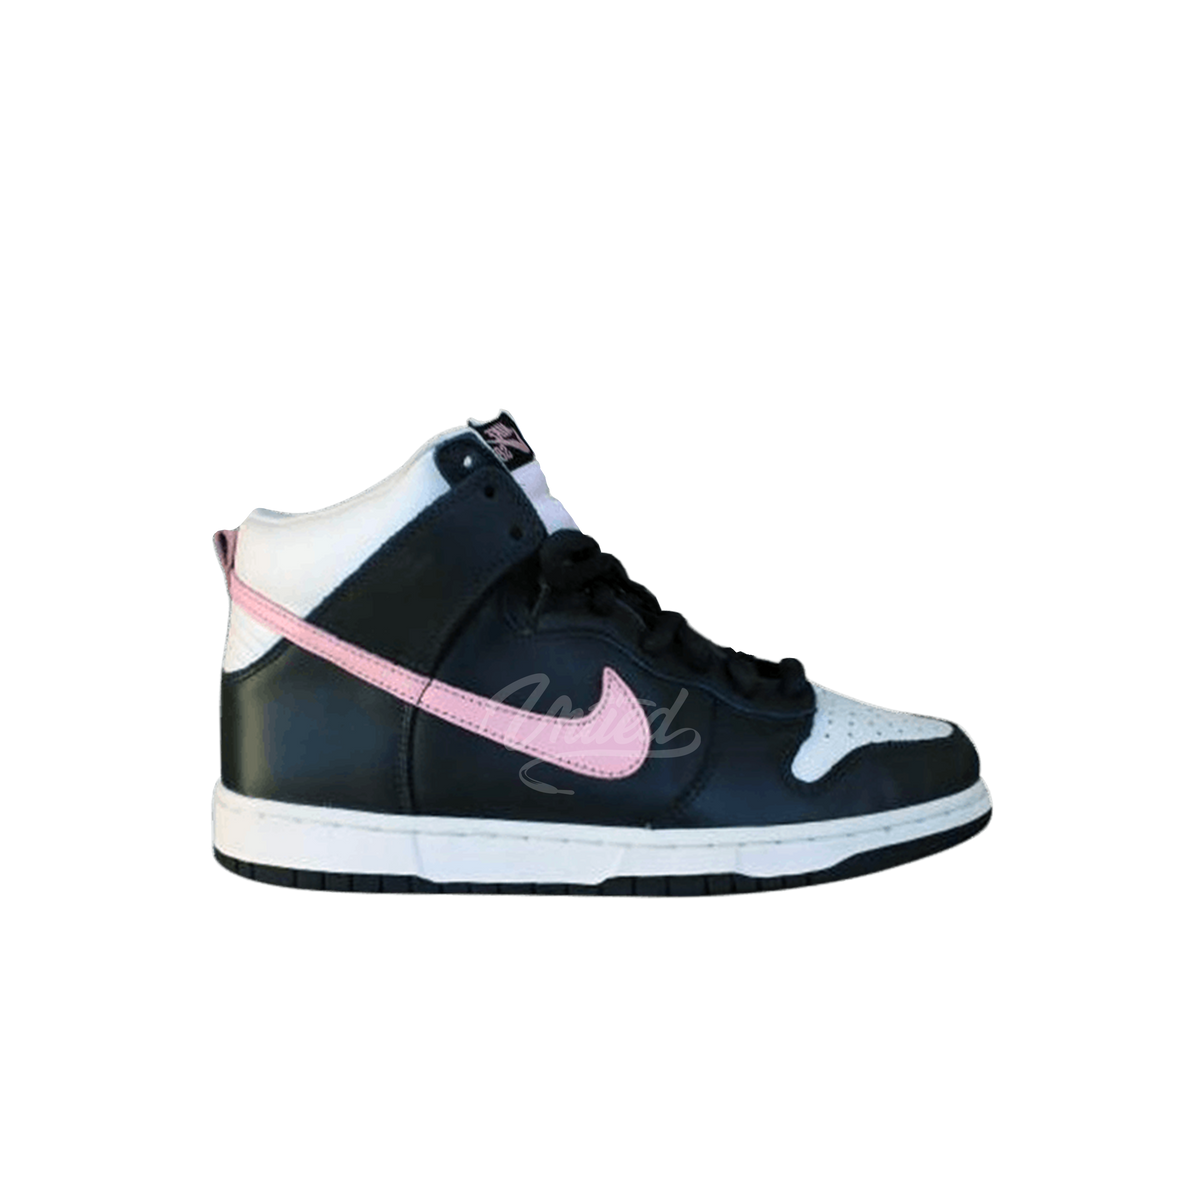 Nike SB Dunk High "Shy Pink"